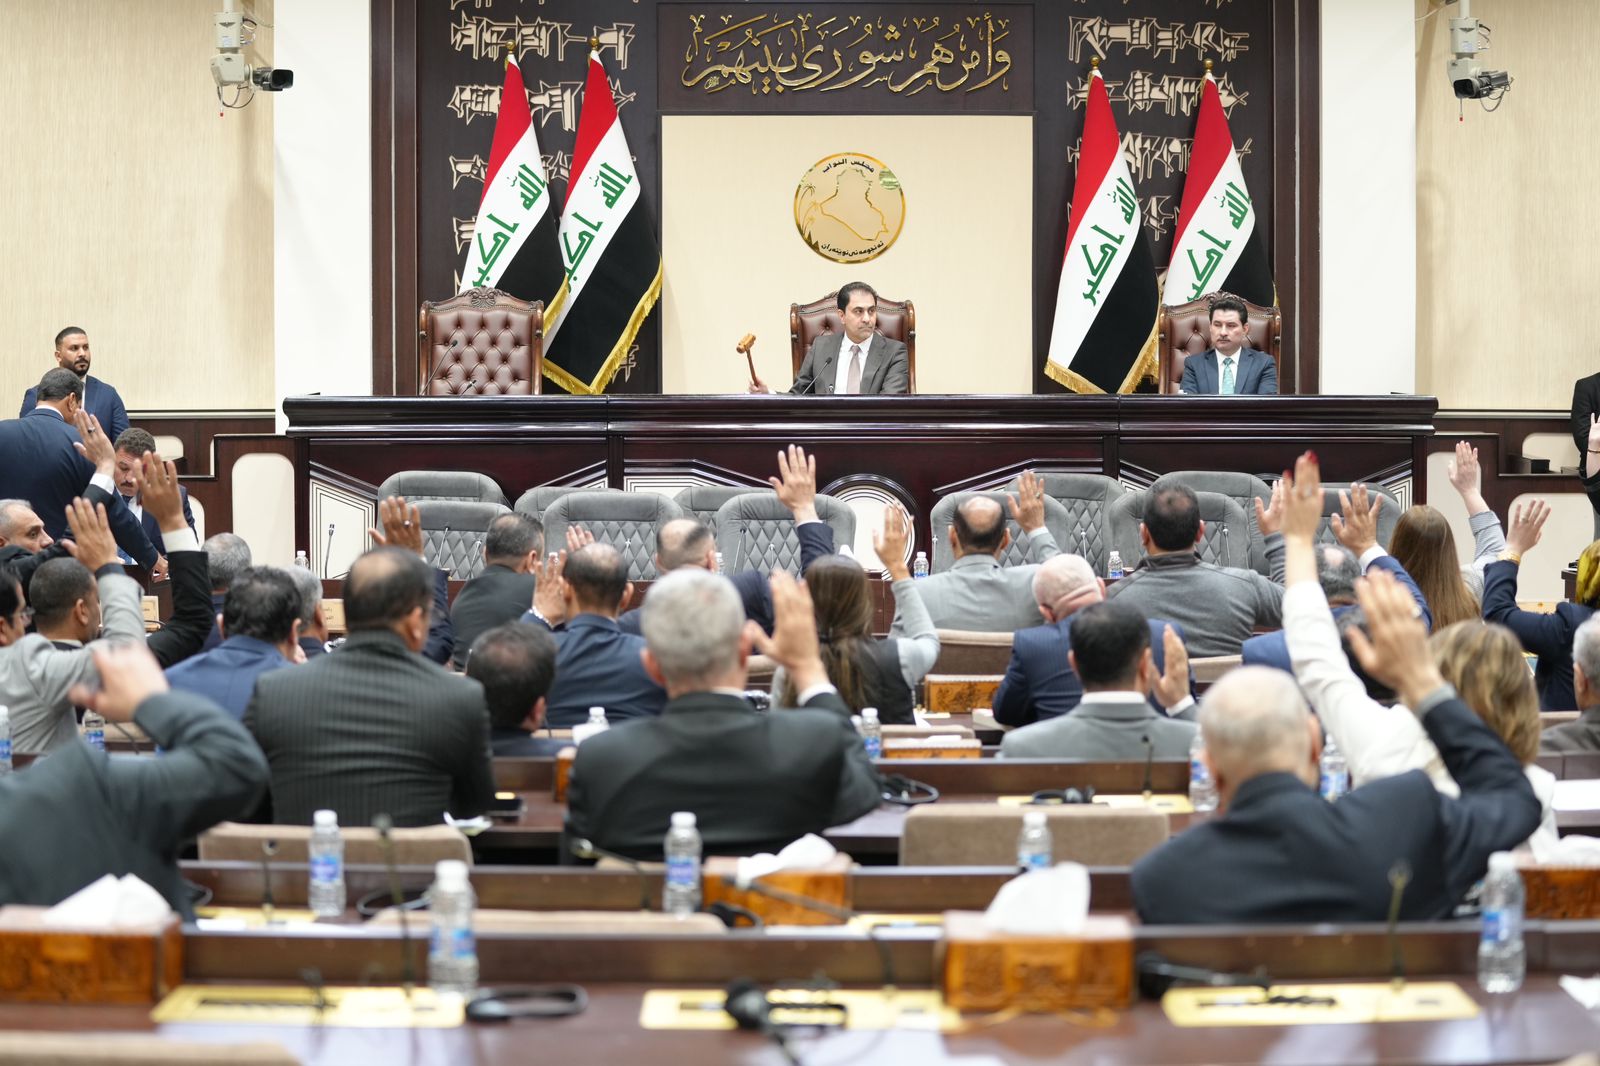 Iraqi press watch backs Iraqi journalists as they boycott parliament